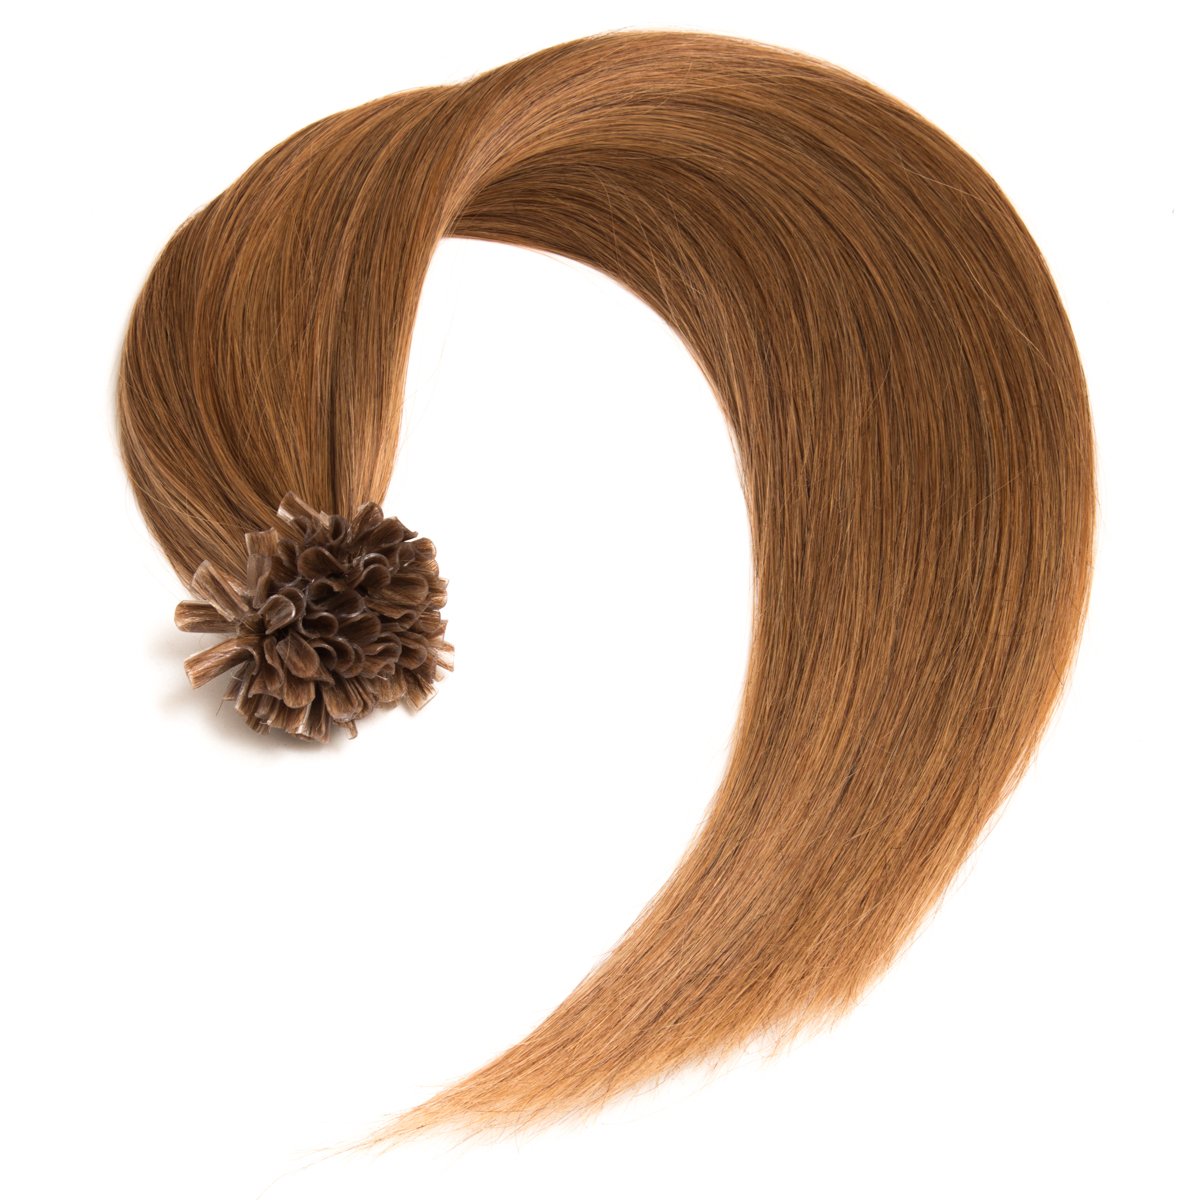 Hellbraune Keratin Bonding Extensions aus 100% Remy Echthaar/Human Hair 150 0,5g 50cm Glatte Strähnen - U-Tip als Haarverlängerung und Haarverdichtung - Farbe: #12 Hellbraun